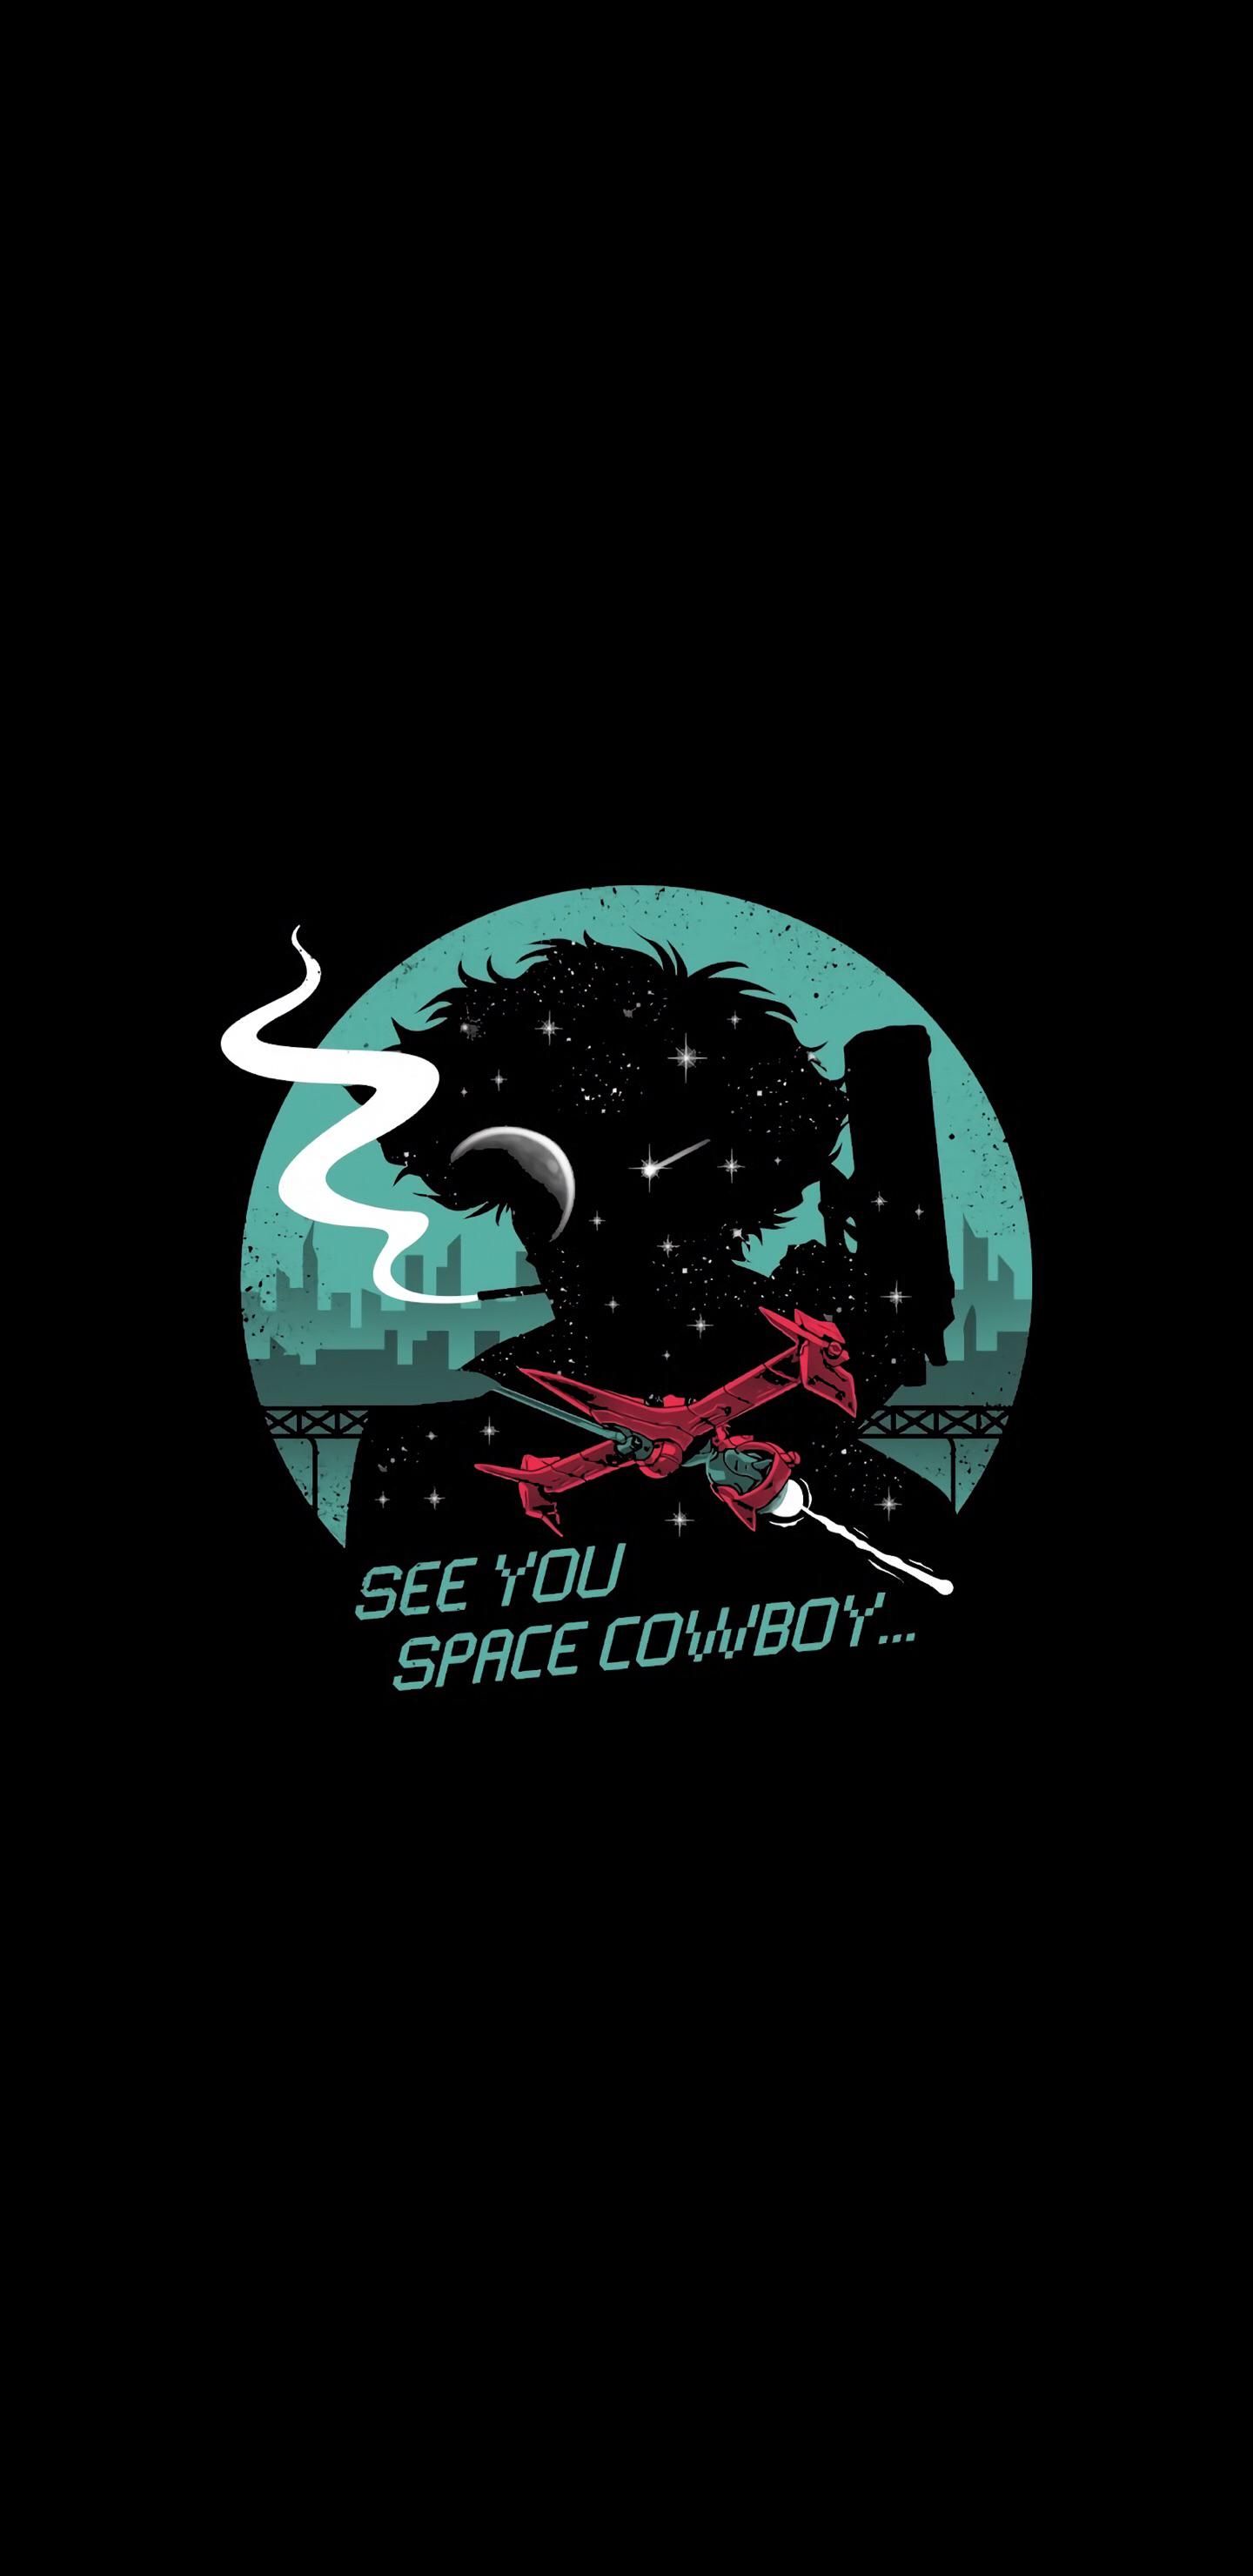 See you space cowboy. Cowboy bebop wallpaper, Space cowboys